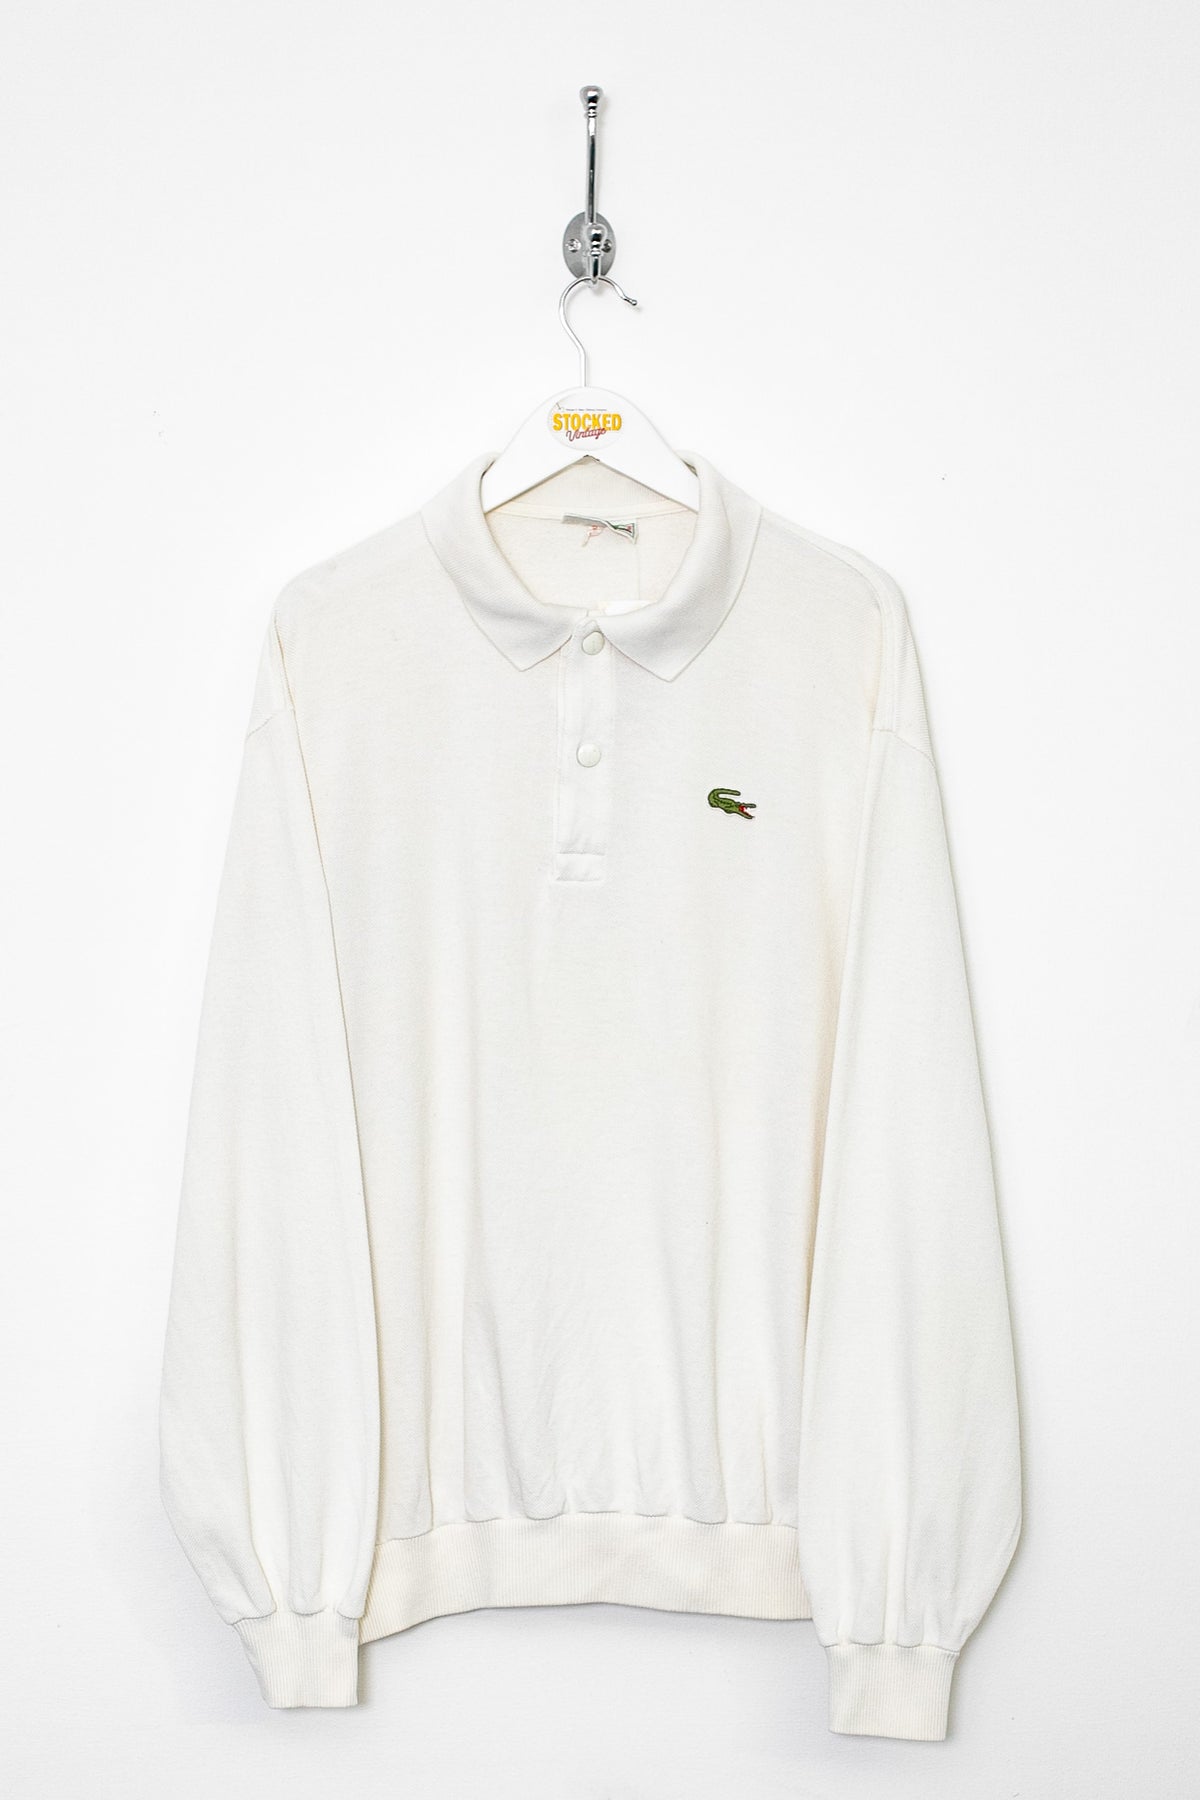 90s Lacoste Long Sleeve Polo Shirt (L)